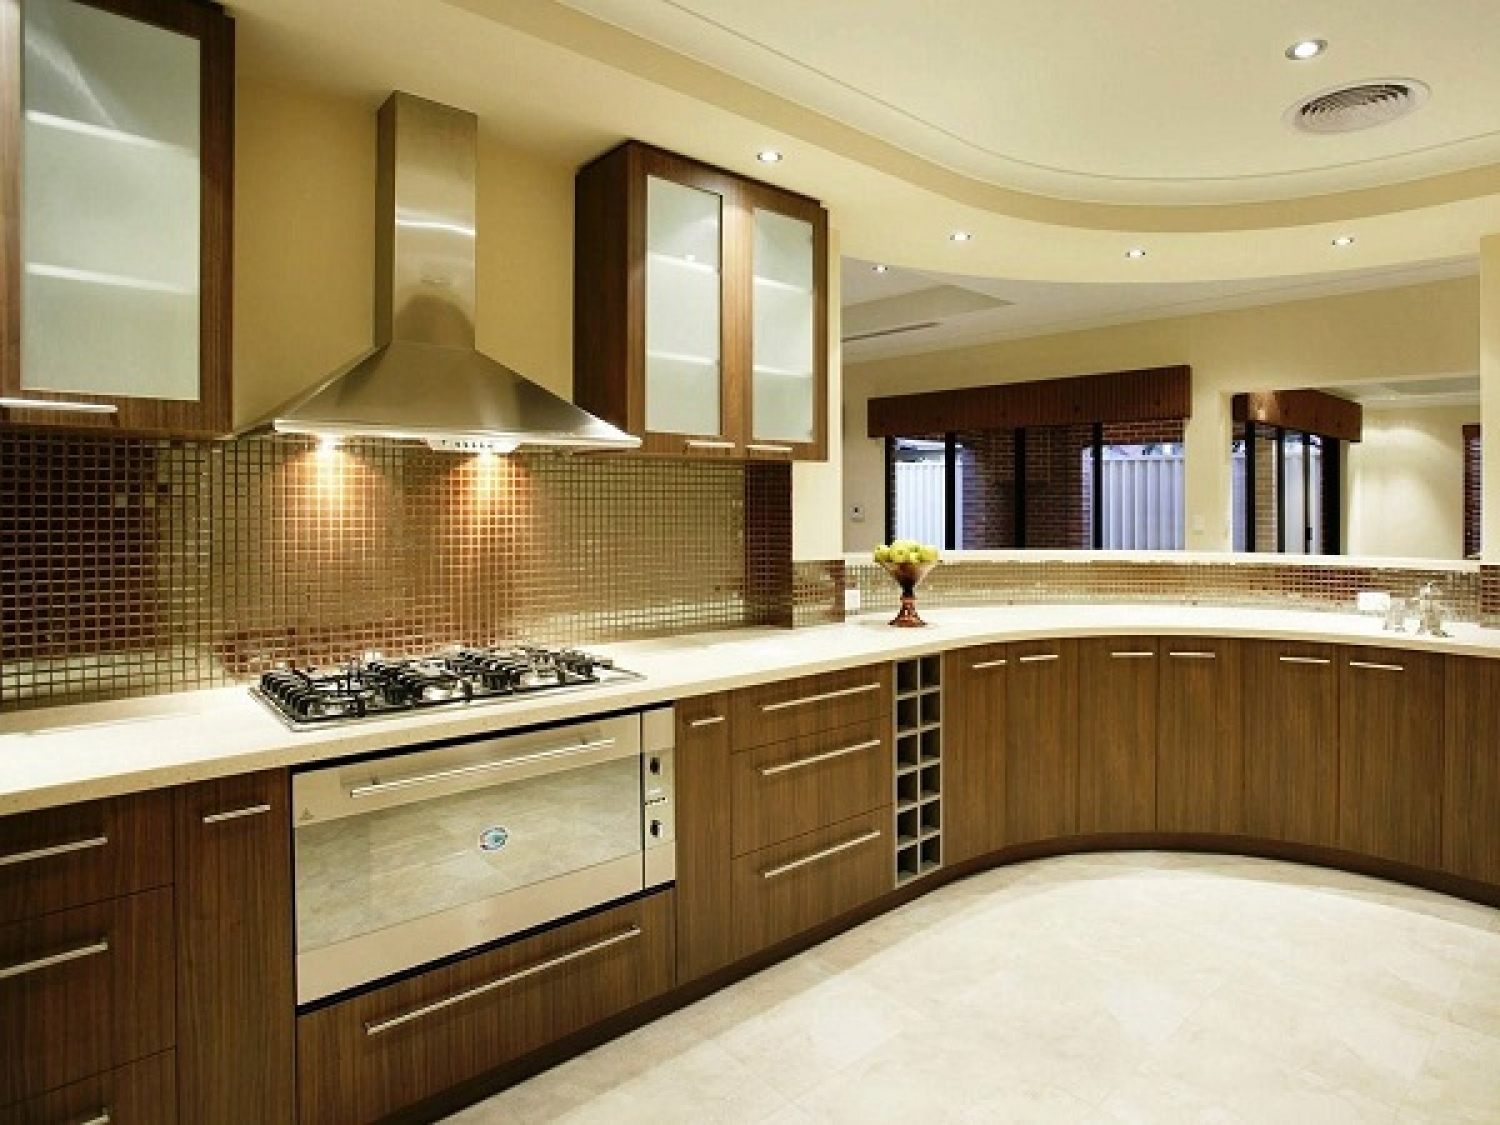 Get Modular Kitchen Design Images Gif – Interiors Home Design